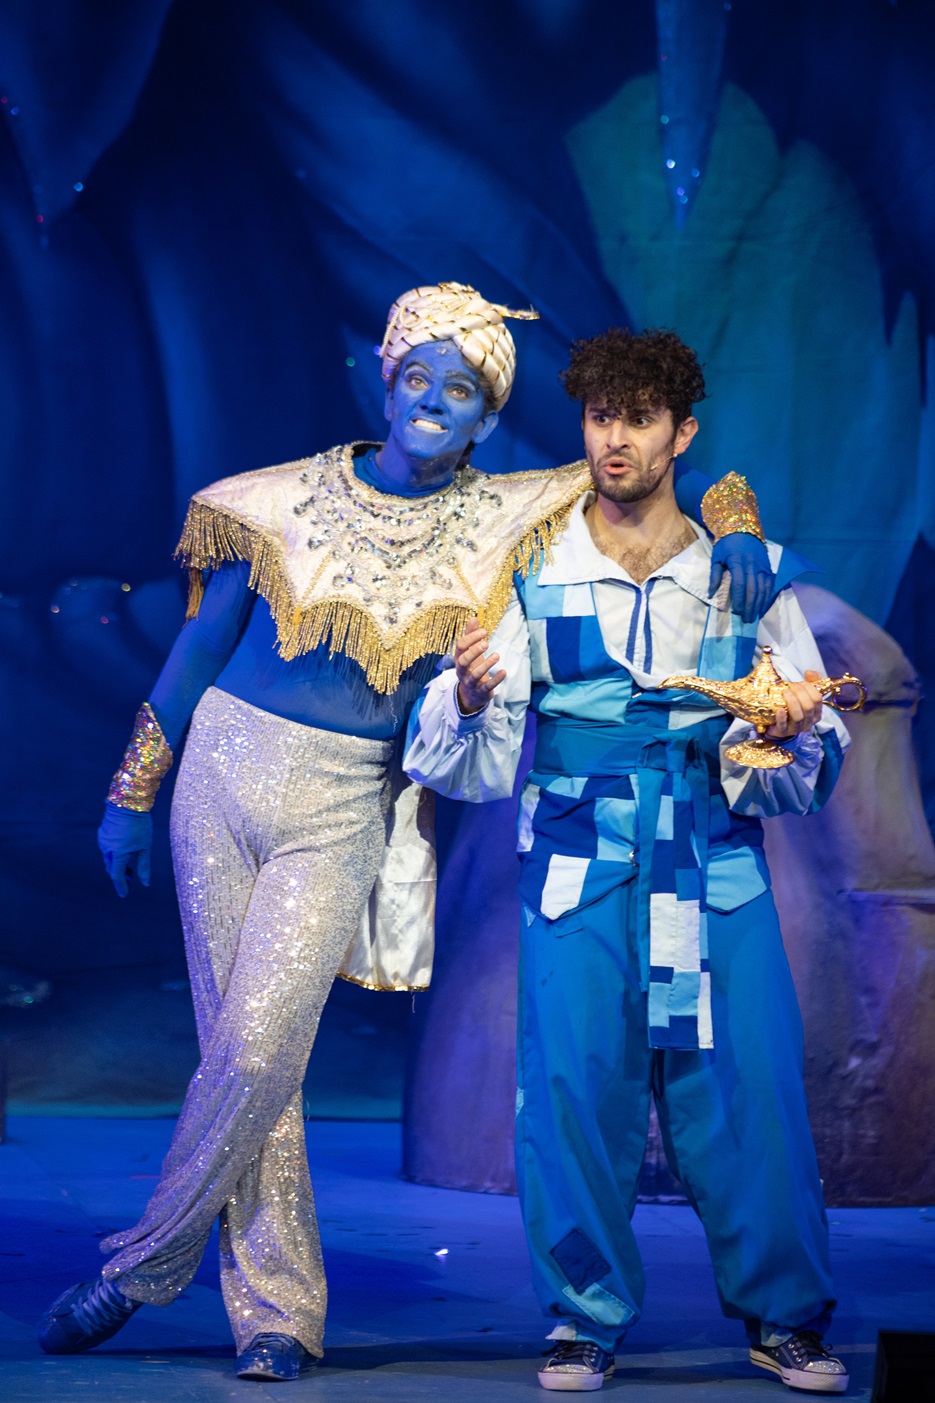 Tim Lucas as The Genie, and Alex Adam as Aladdin - Aladdin - Credit David Munn